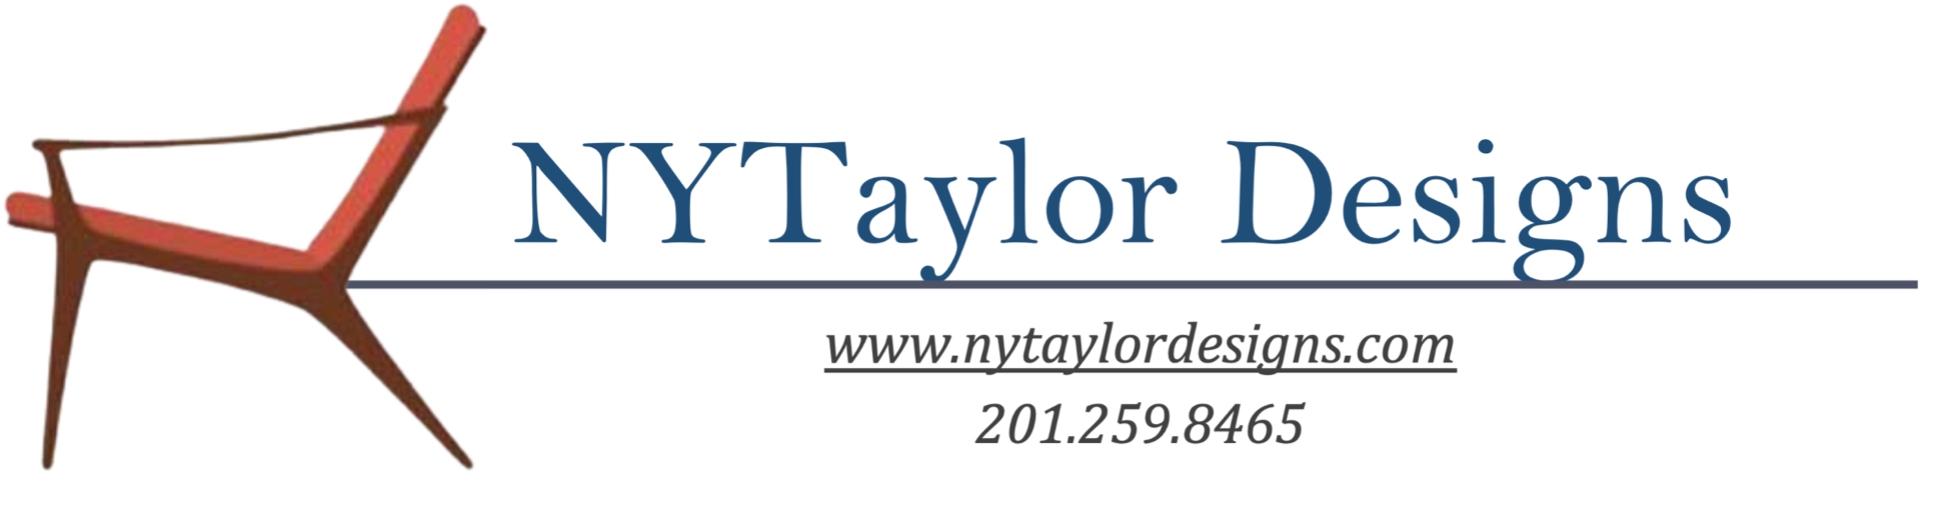 NYTaylor Designs Logo